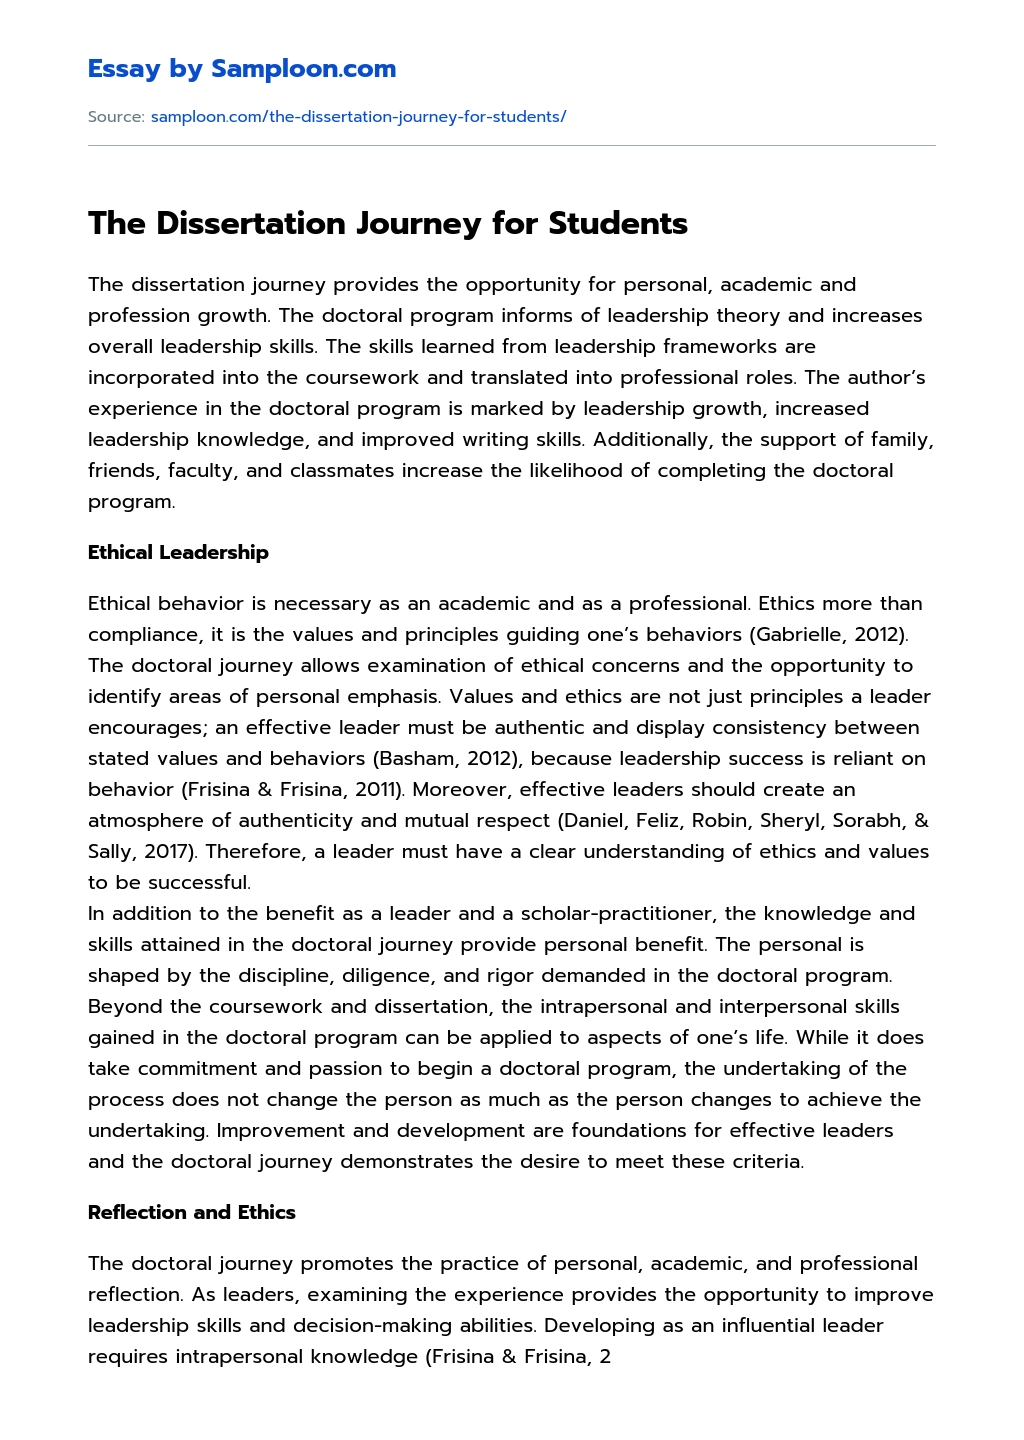 The Dissertation Journey for Students Argumentative Essay essay